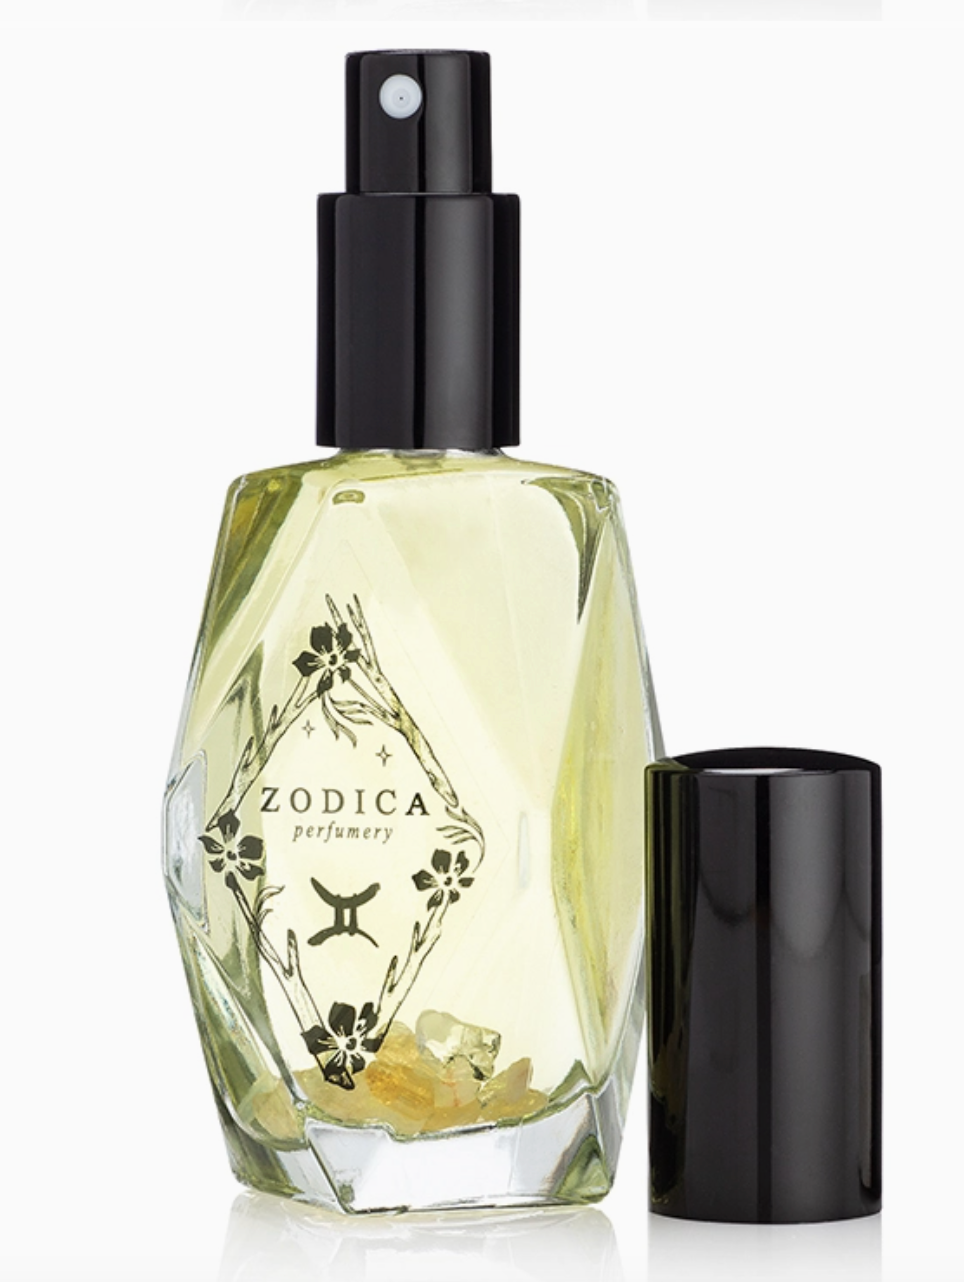 Zodica 150ml Perfume - Shop Wild Ivy